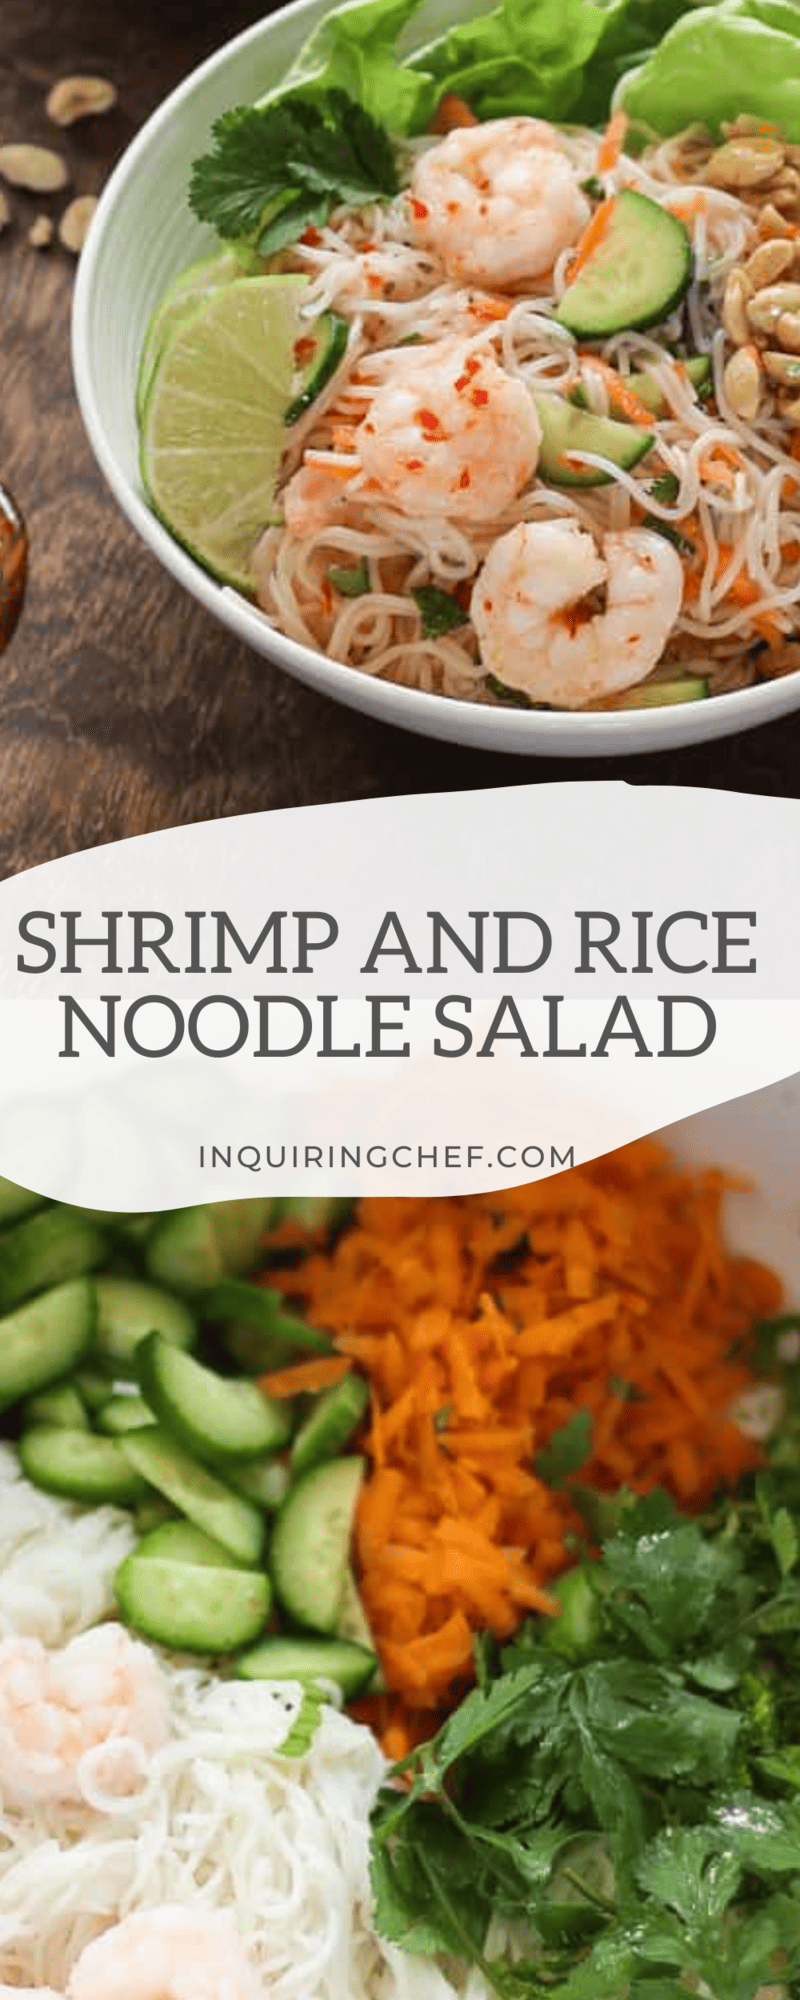 shrimp and rice noodle salad